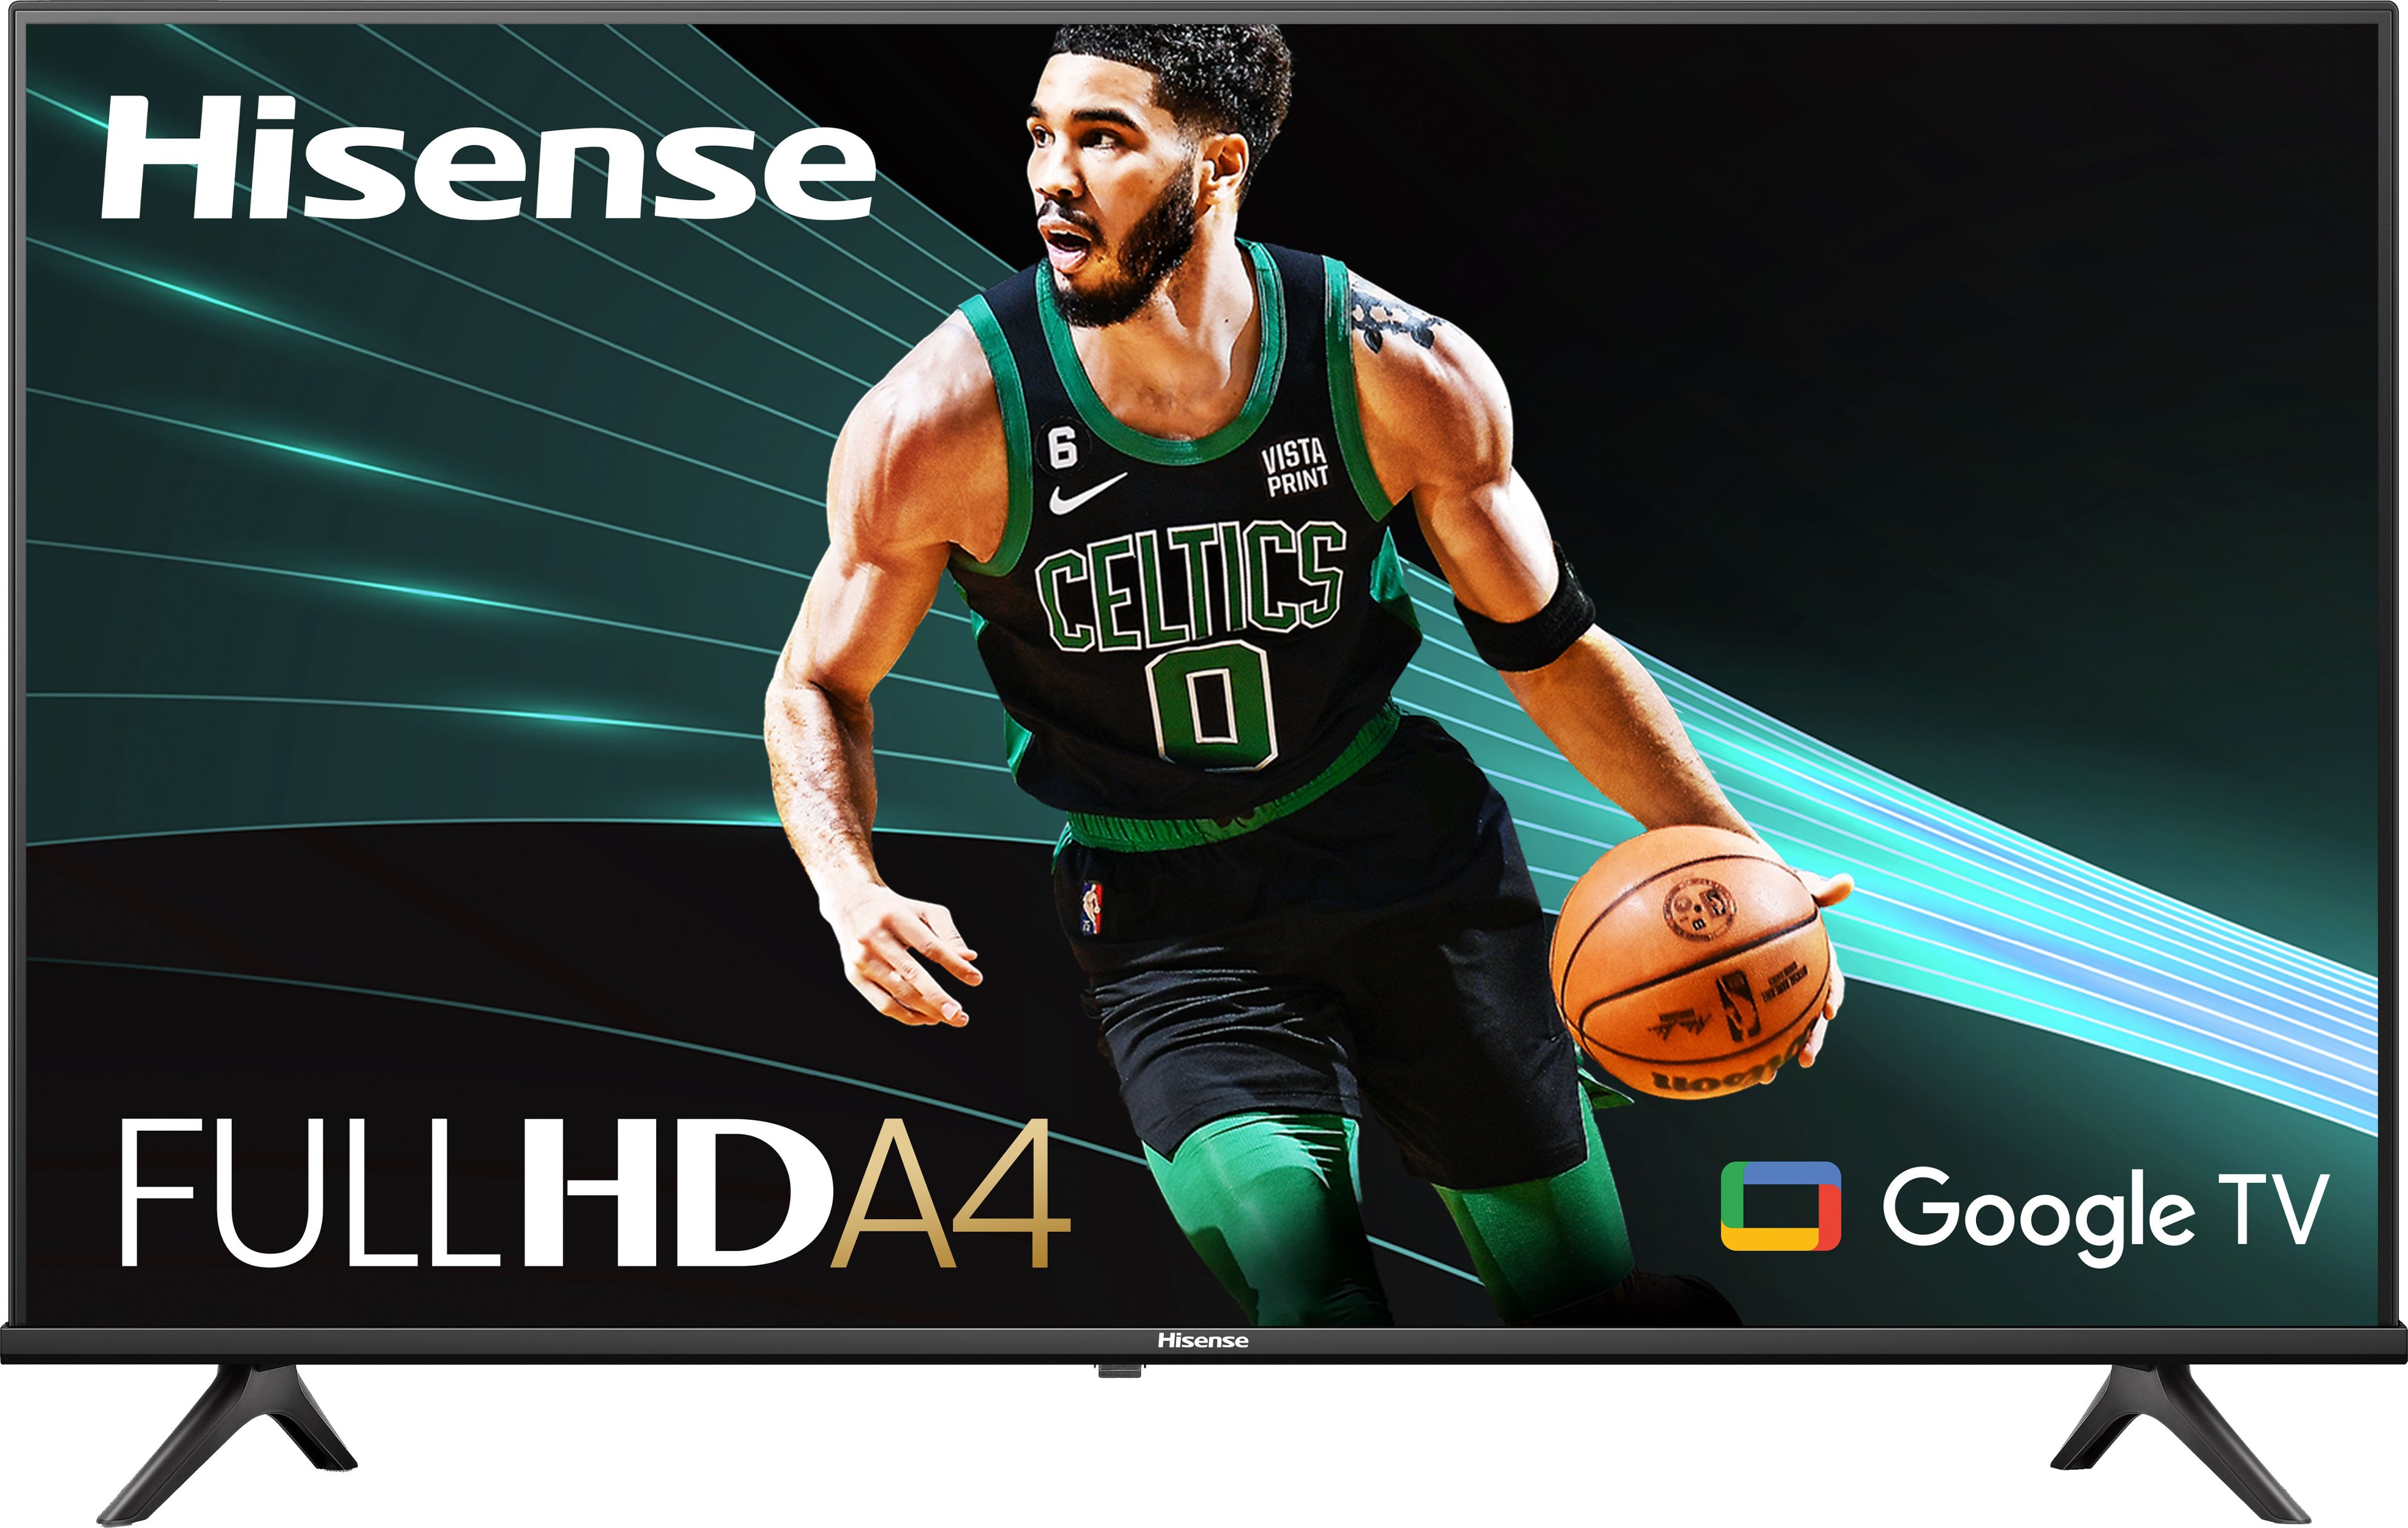 10 New Boston Celtics Hd Wallpaper FULL HD 1080p For PC Desktop